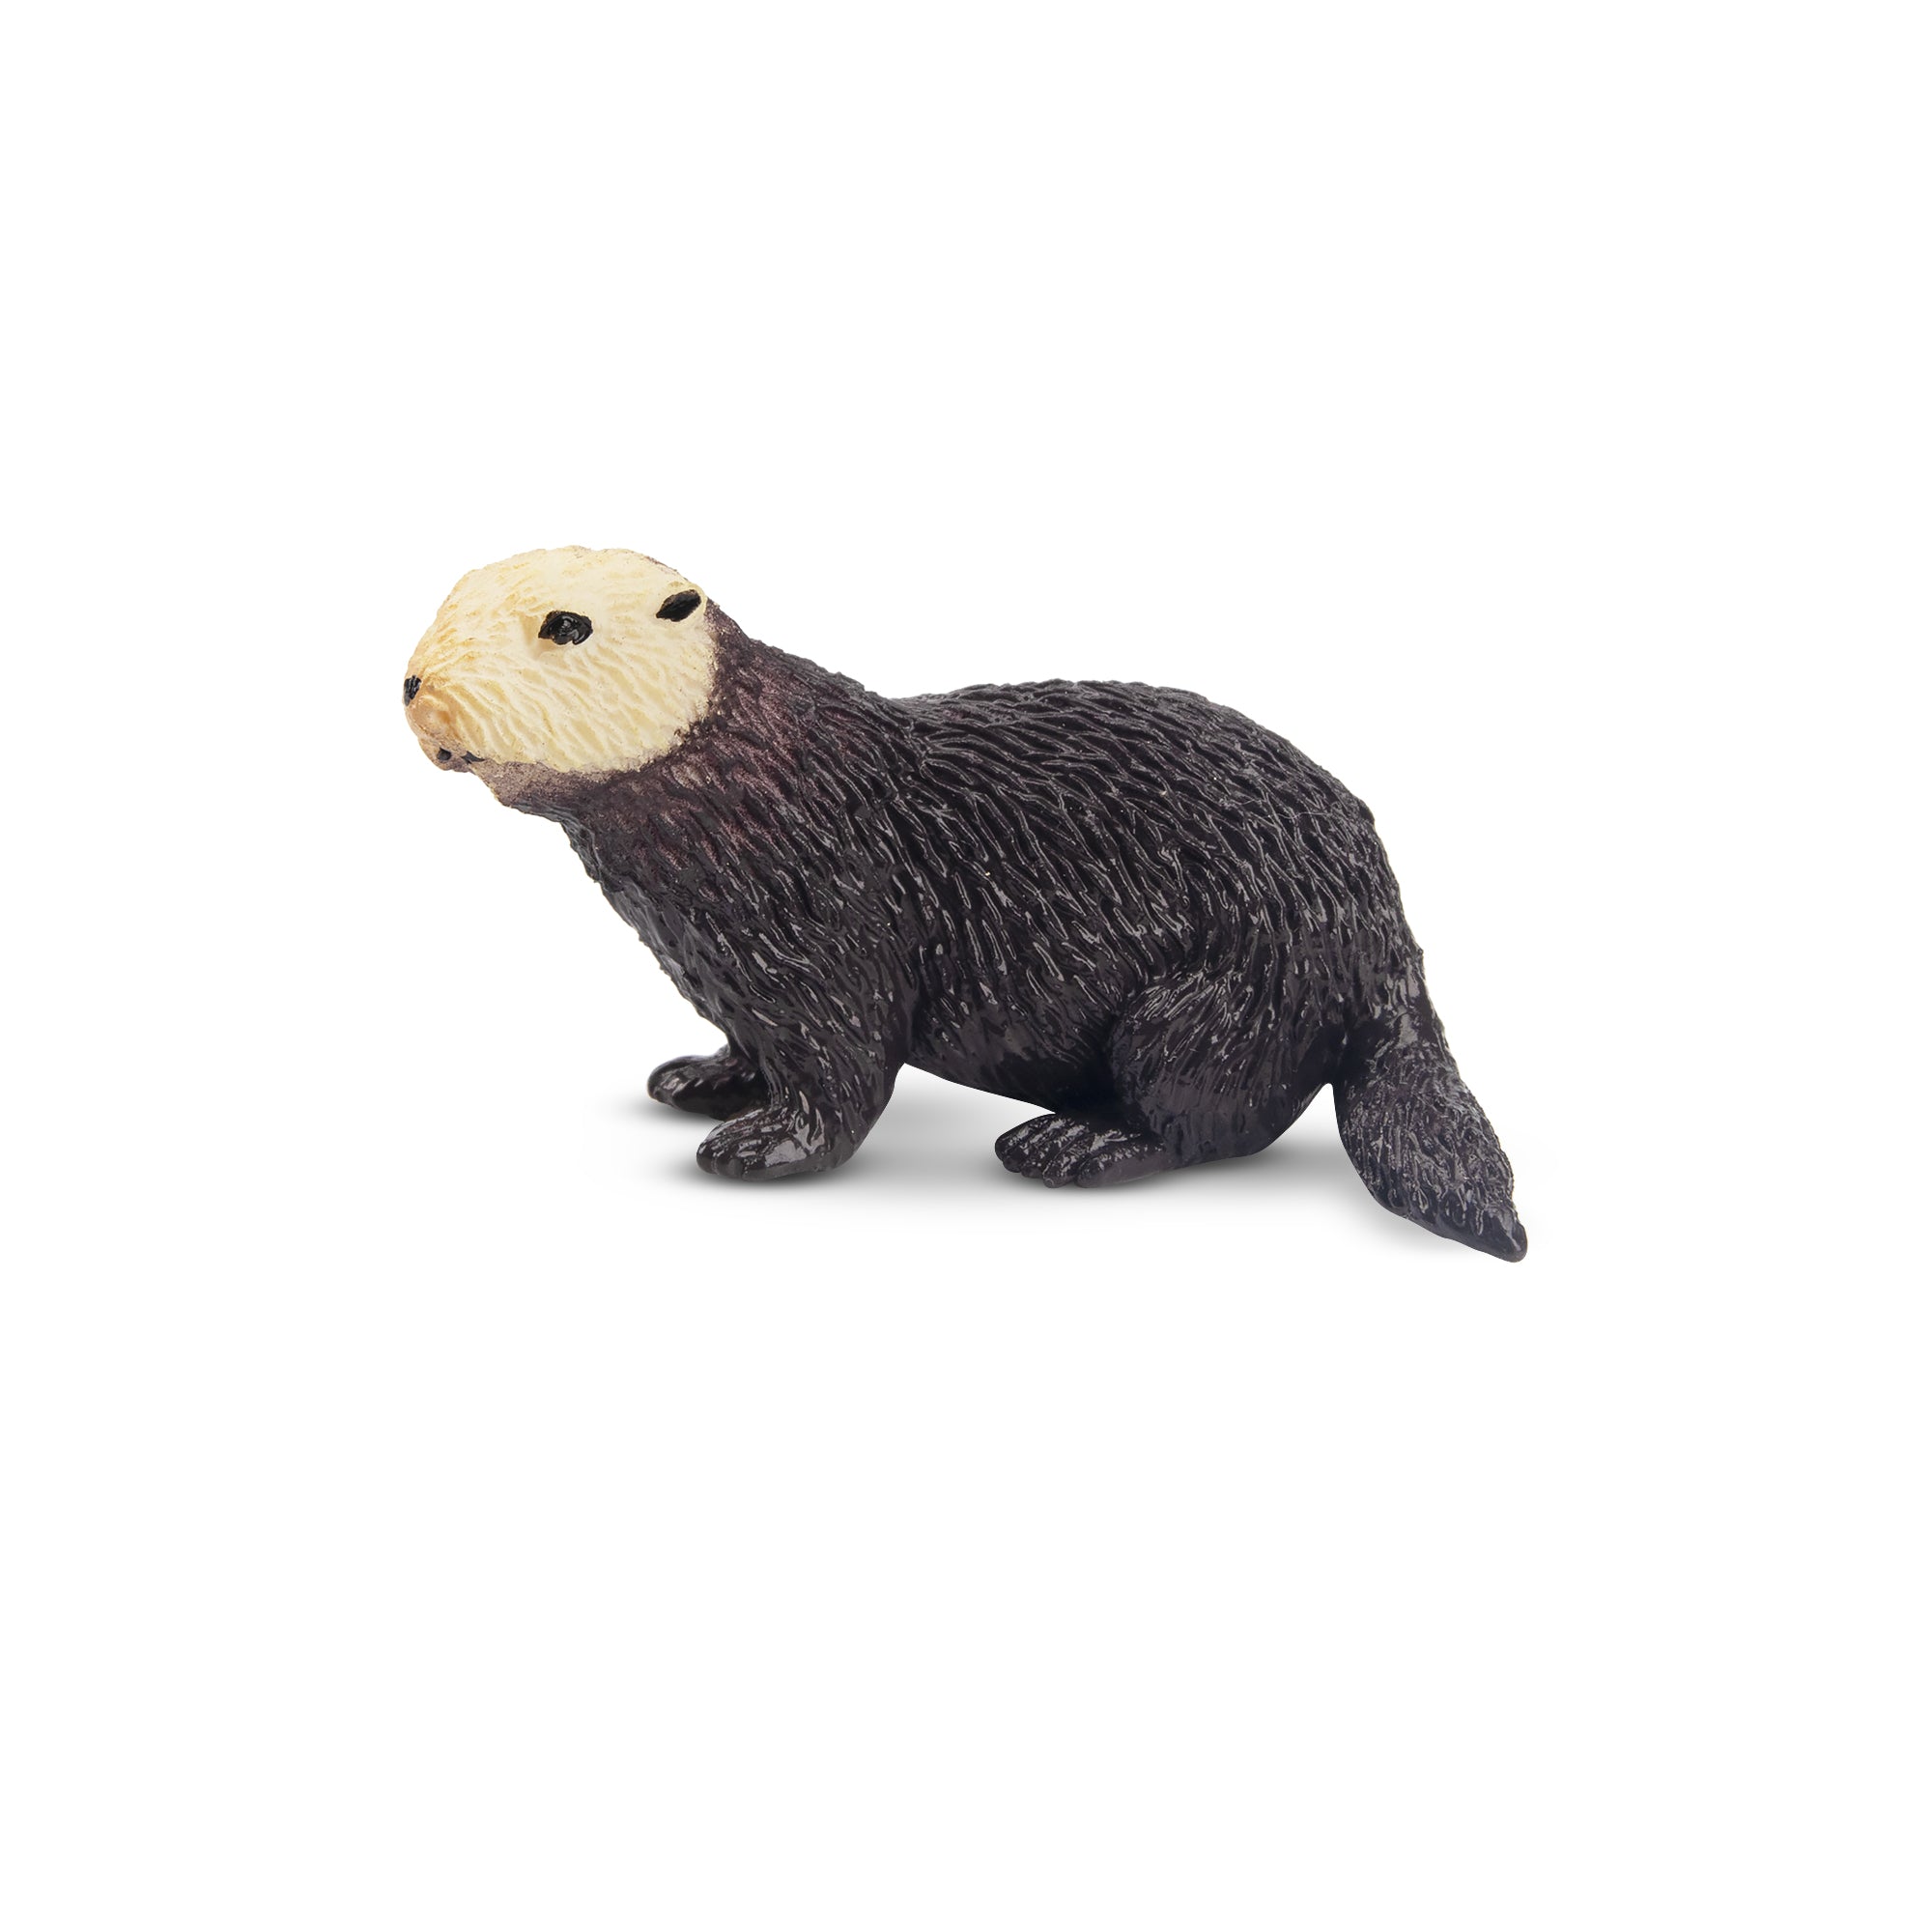 Toymany Sea Otter Figurine Toy